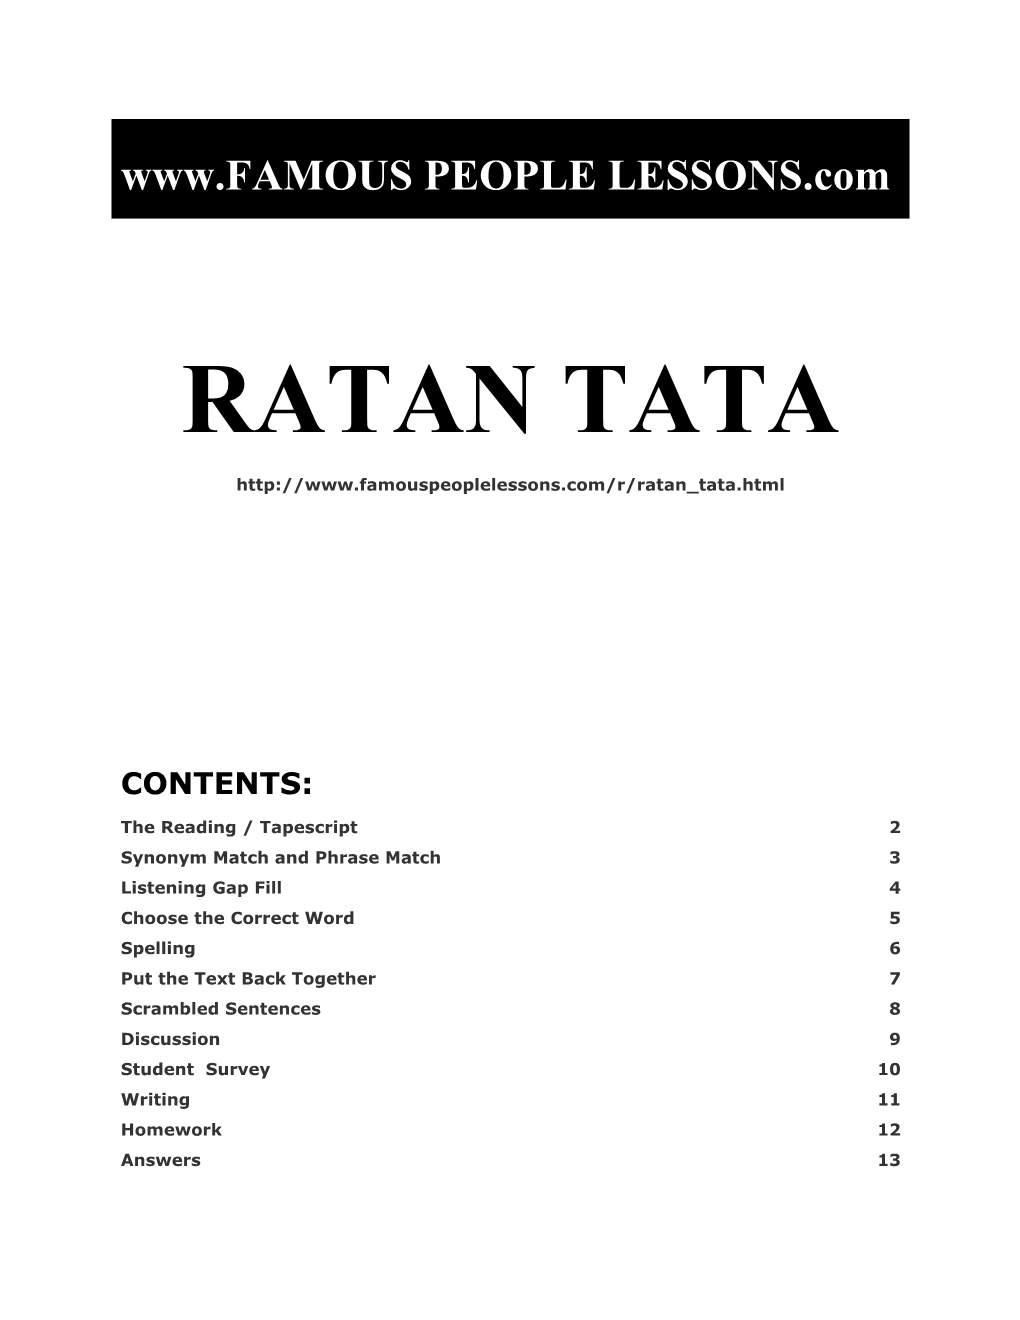 Famous People Lessons - Ratan Tata